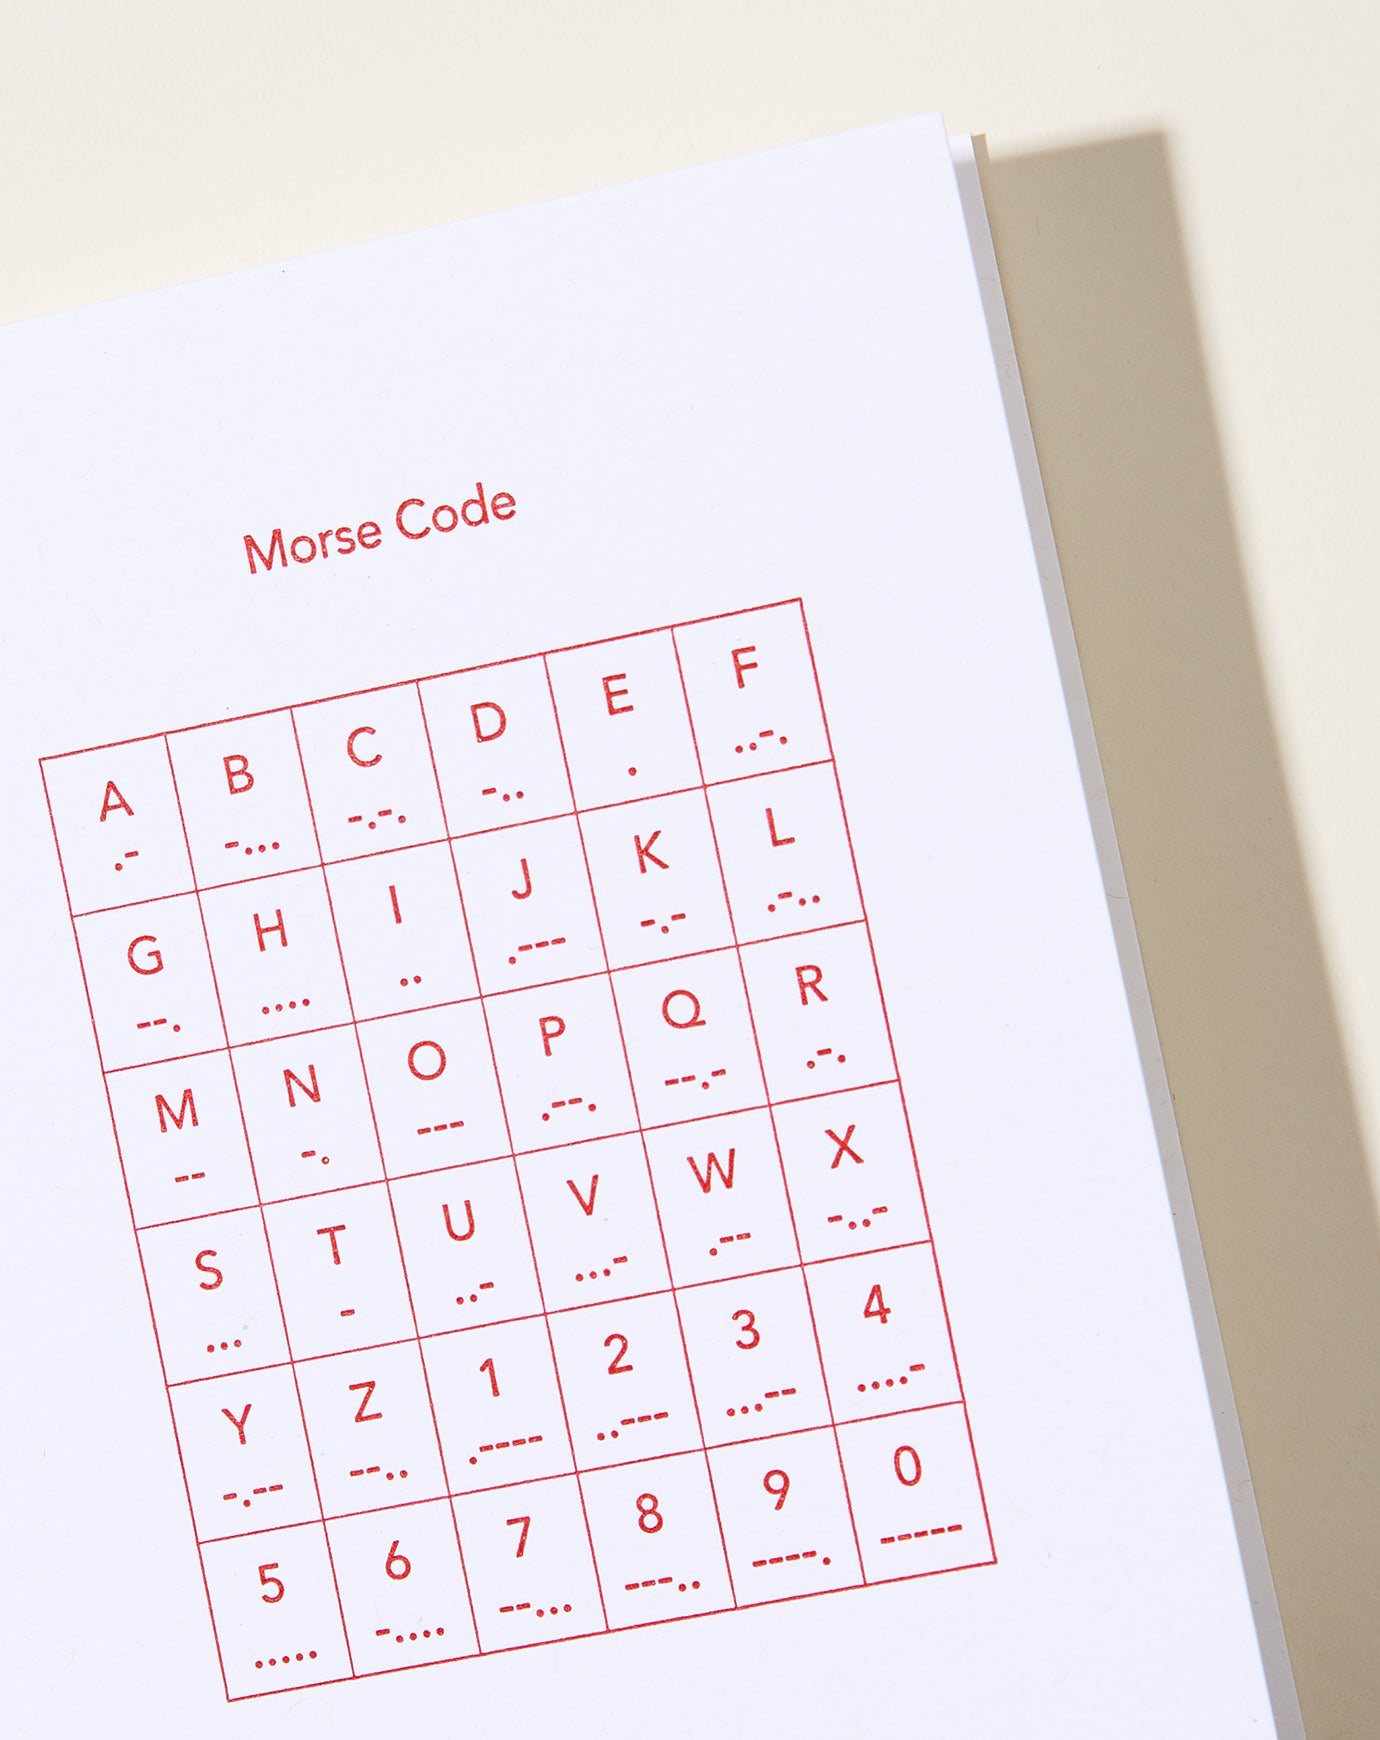 Set Editions Morse Code Card